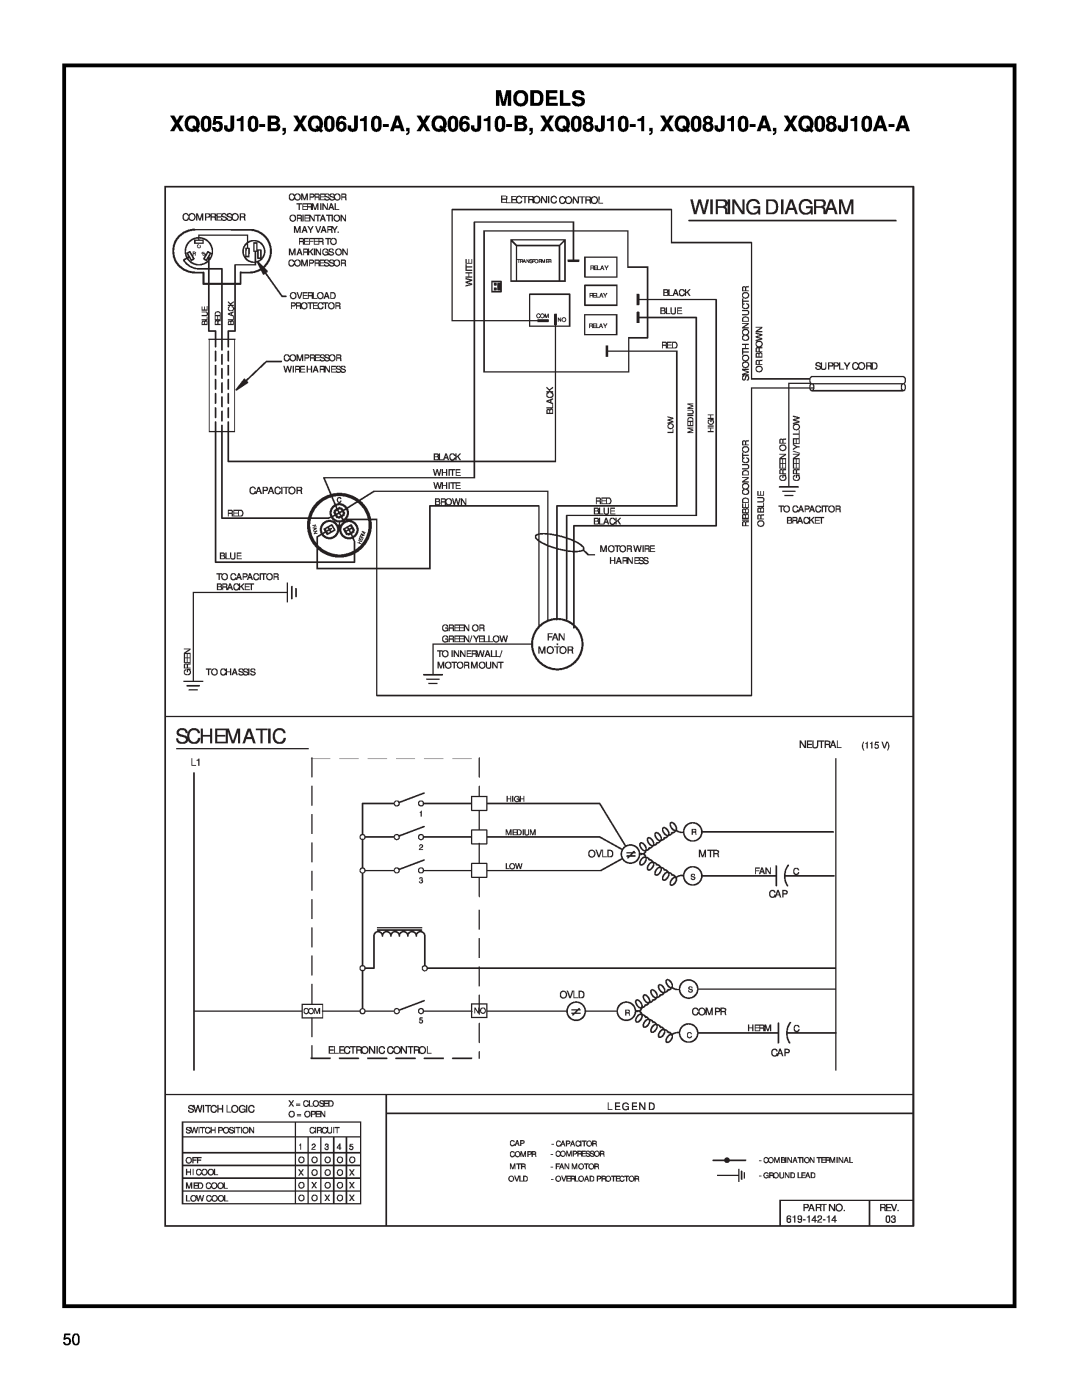 Friedrich 2003 service manual Schematic, Models, Wiring Diagram 